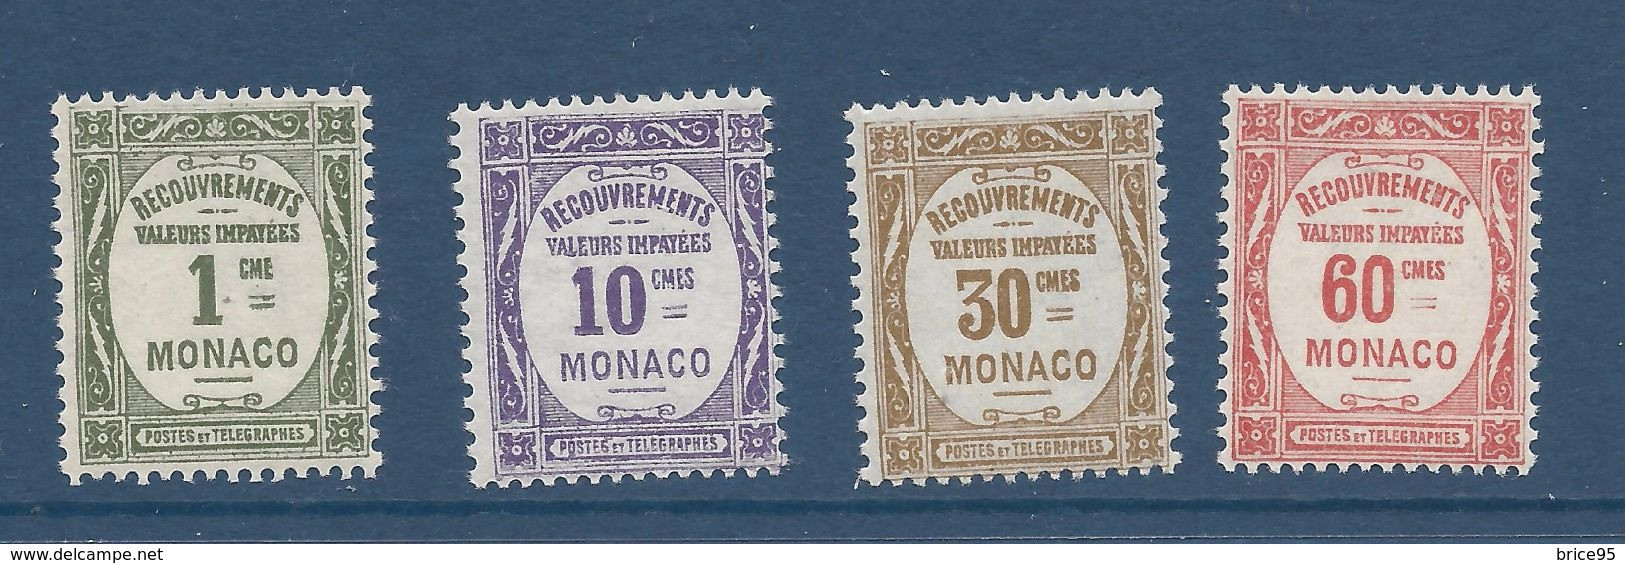 Monaco - Taxe - YT N° 13 à 16 * - Neuf Avec Charnière - 1924 à 1932 - Neufs